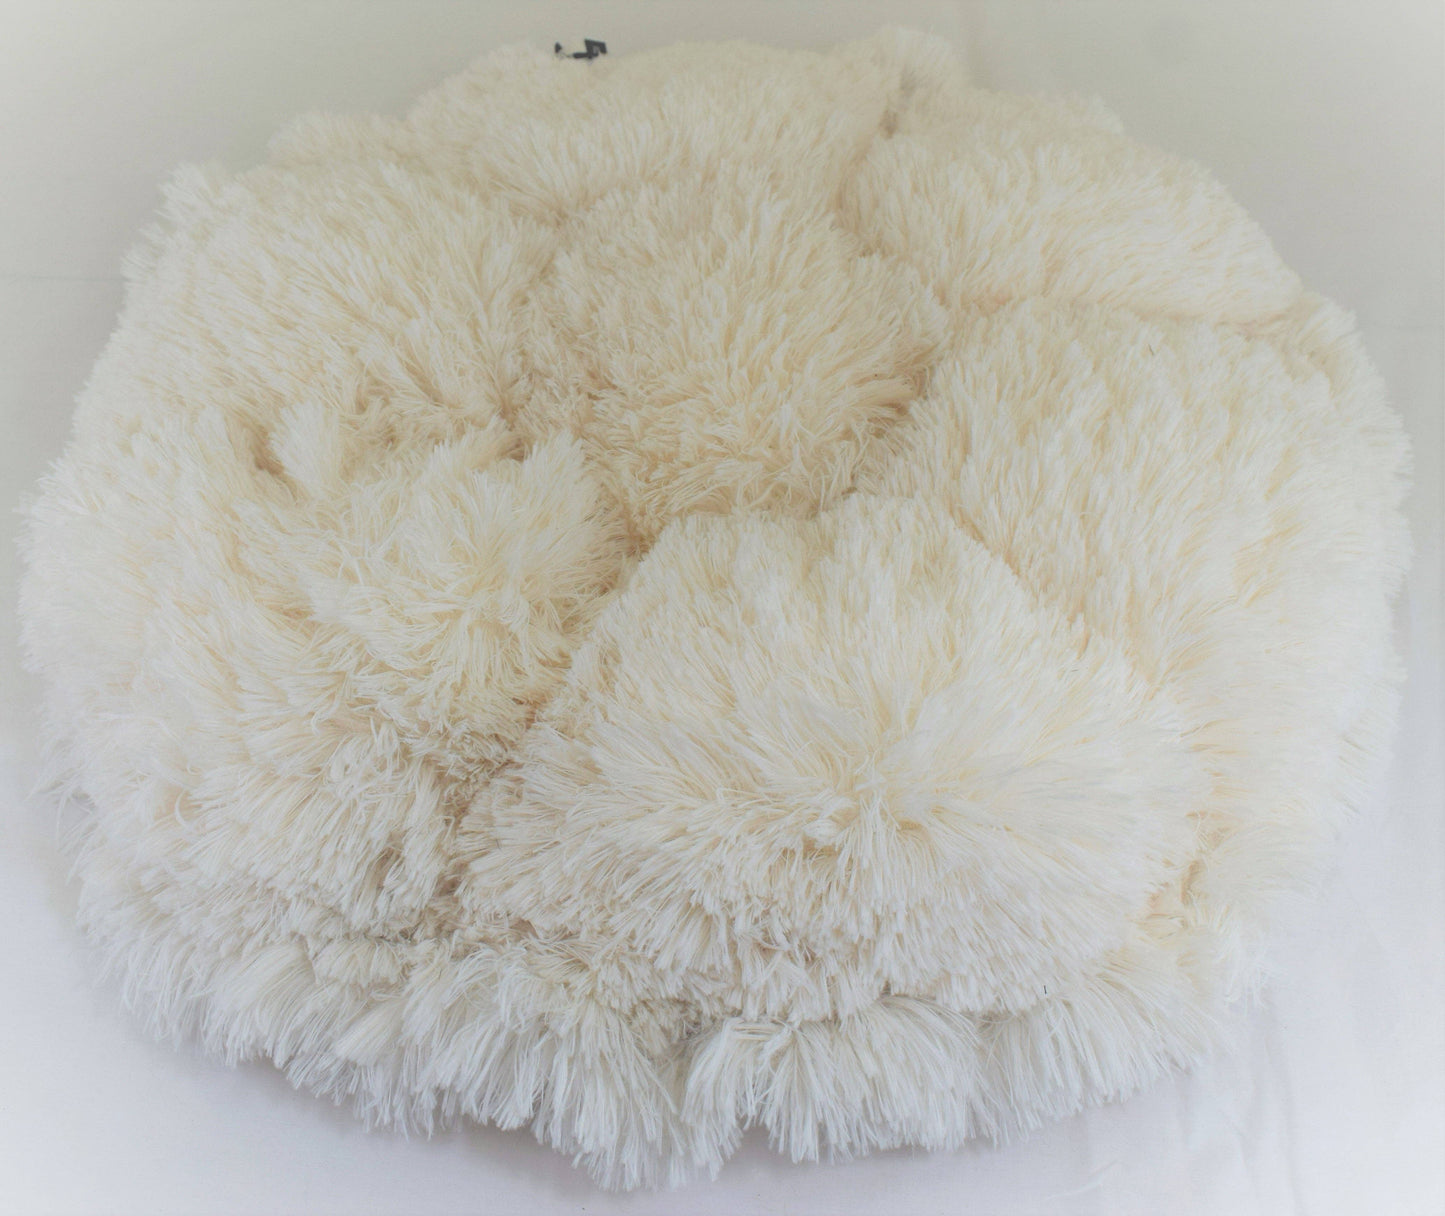 Brown Rabbit & Cream Shag Swaddle Bed:  Image